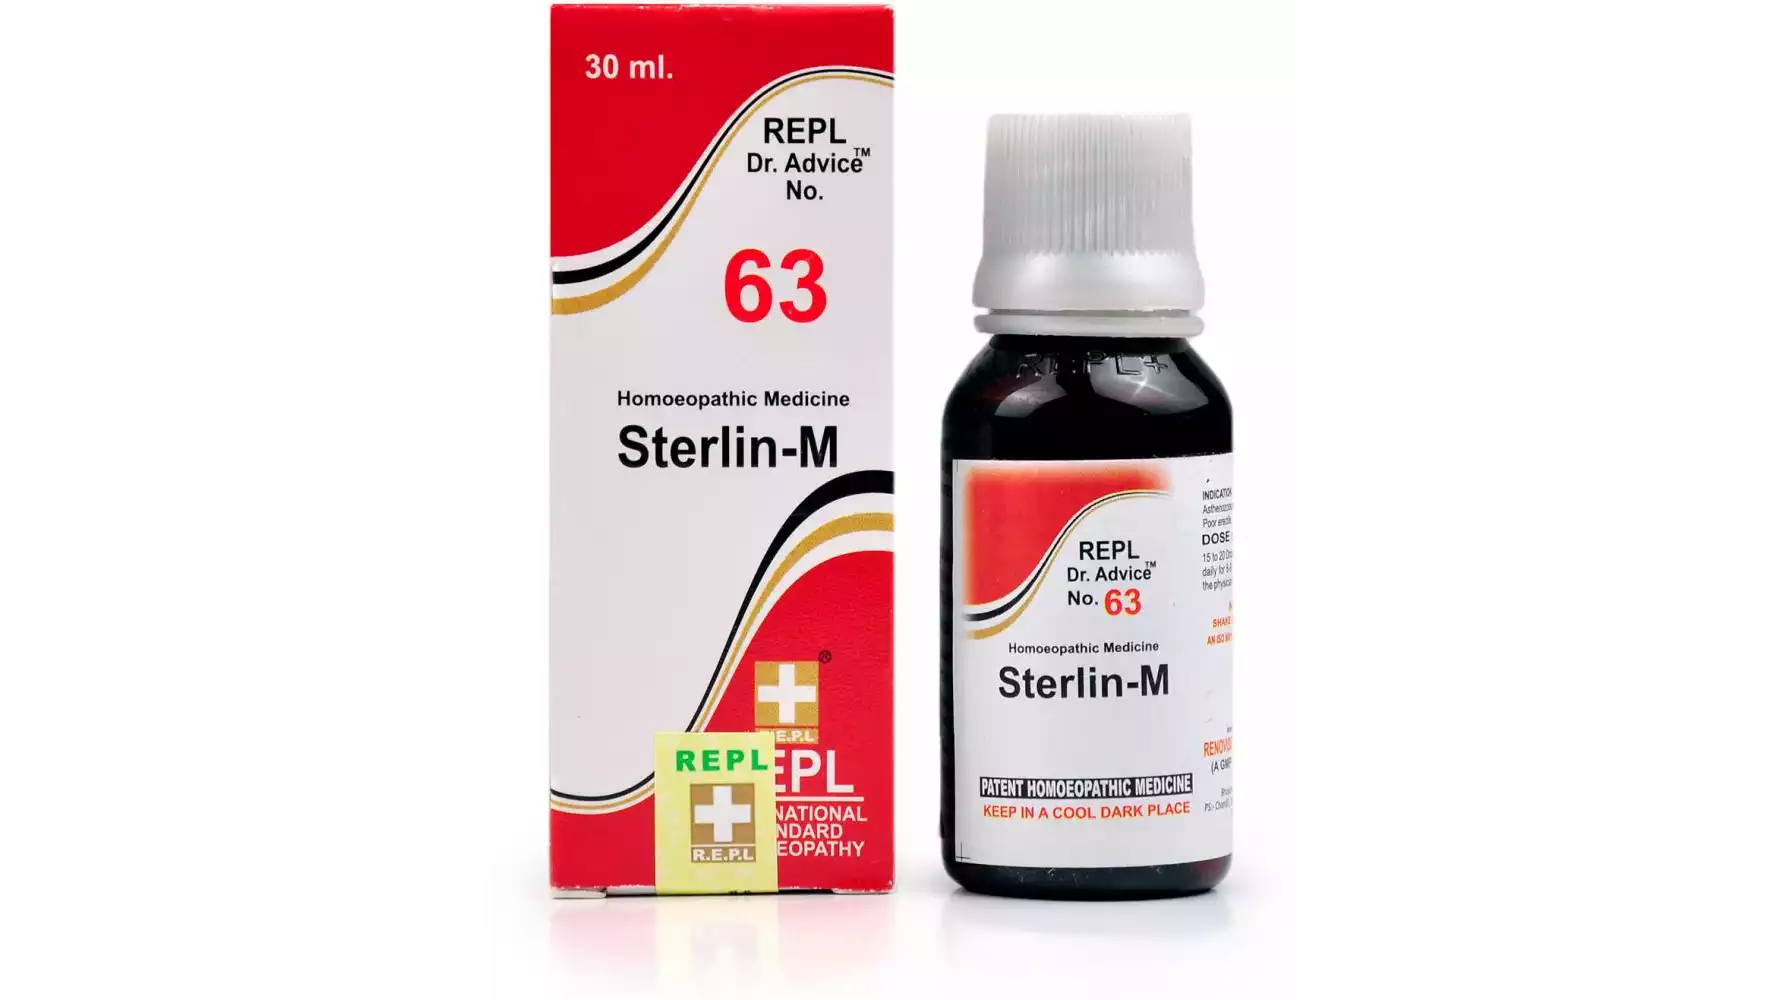 REPL Dr. Advice No 63 (Sterlin-M) (30ml)